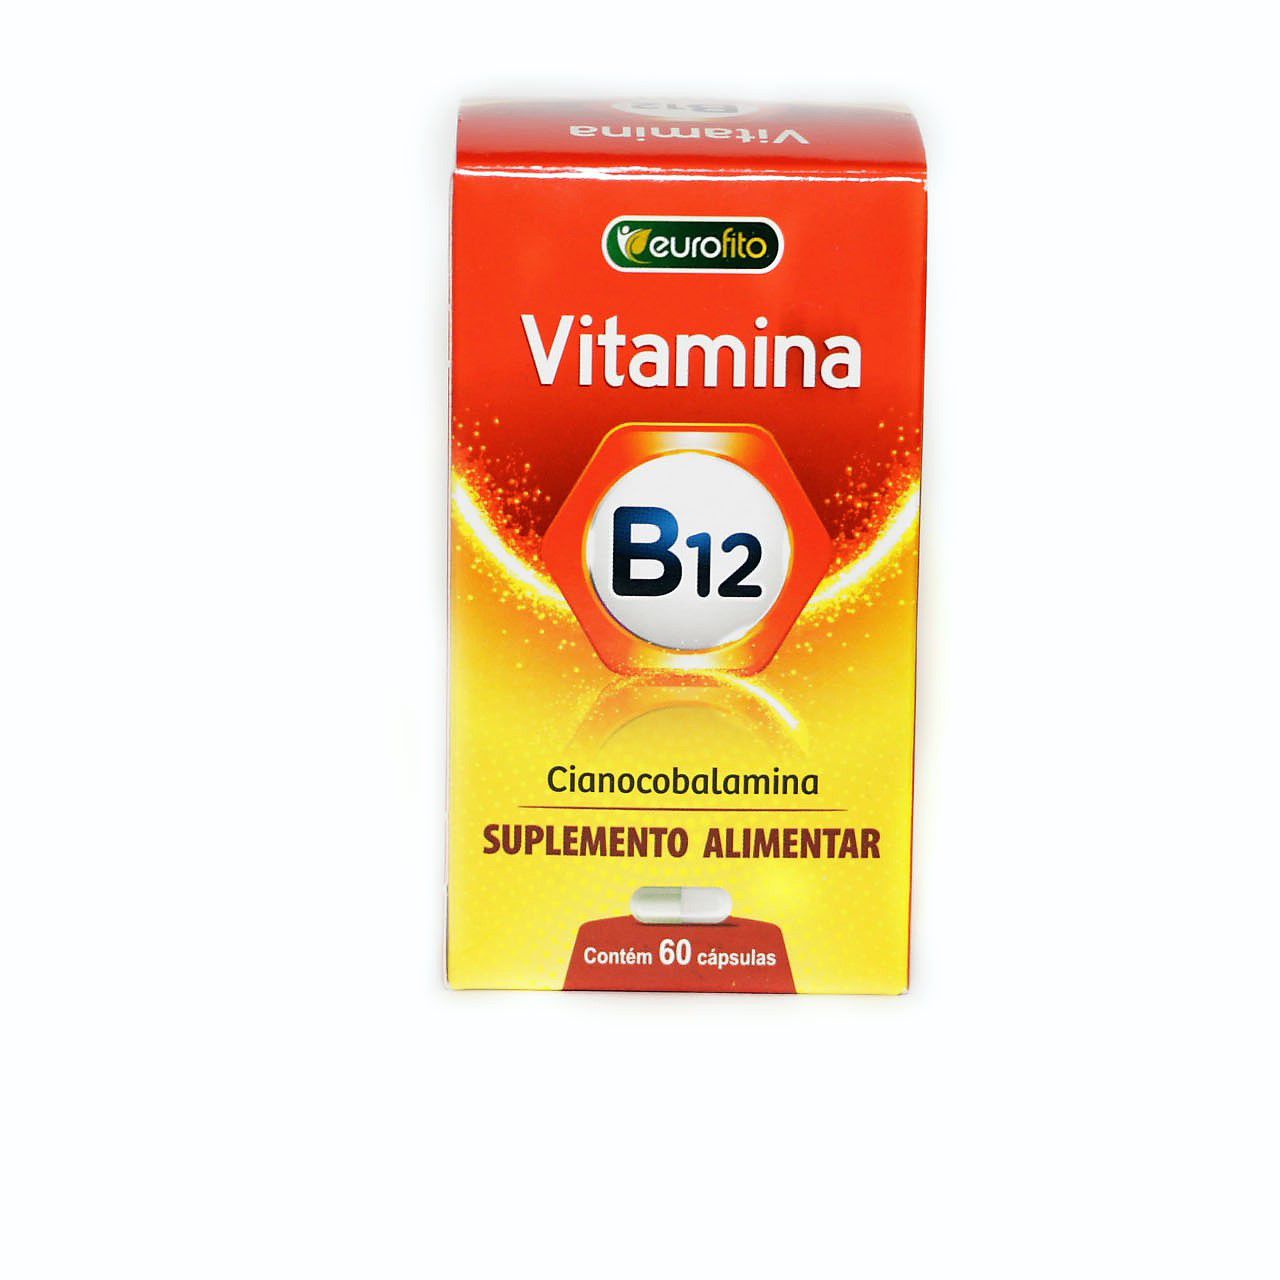 Vitamina B12 CONCENTRADA (Cianocobalamina) - 60 cápsulas - Eurofito